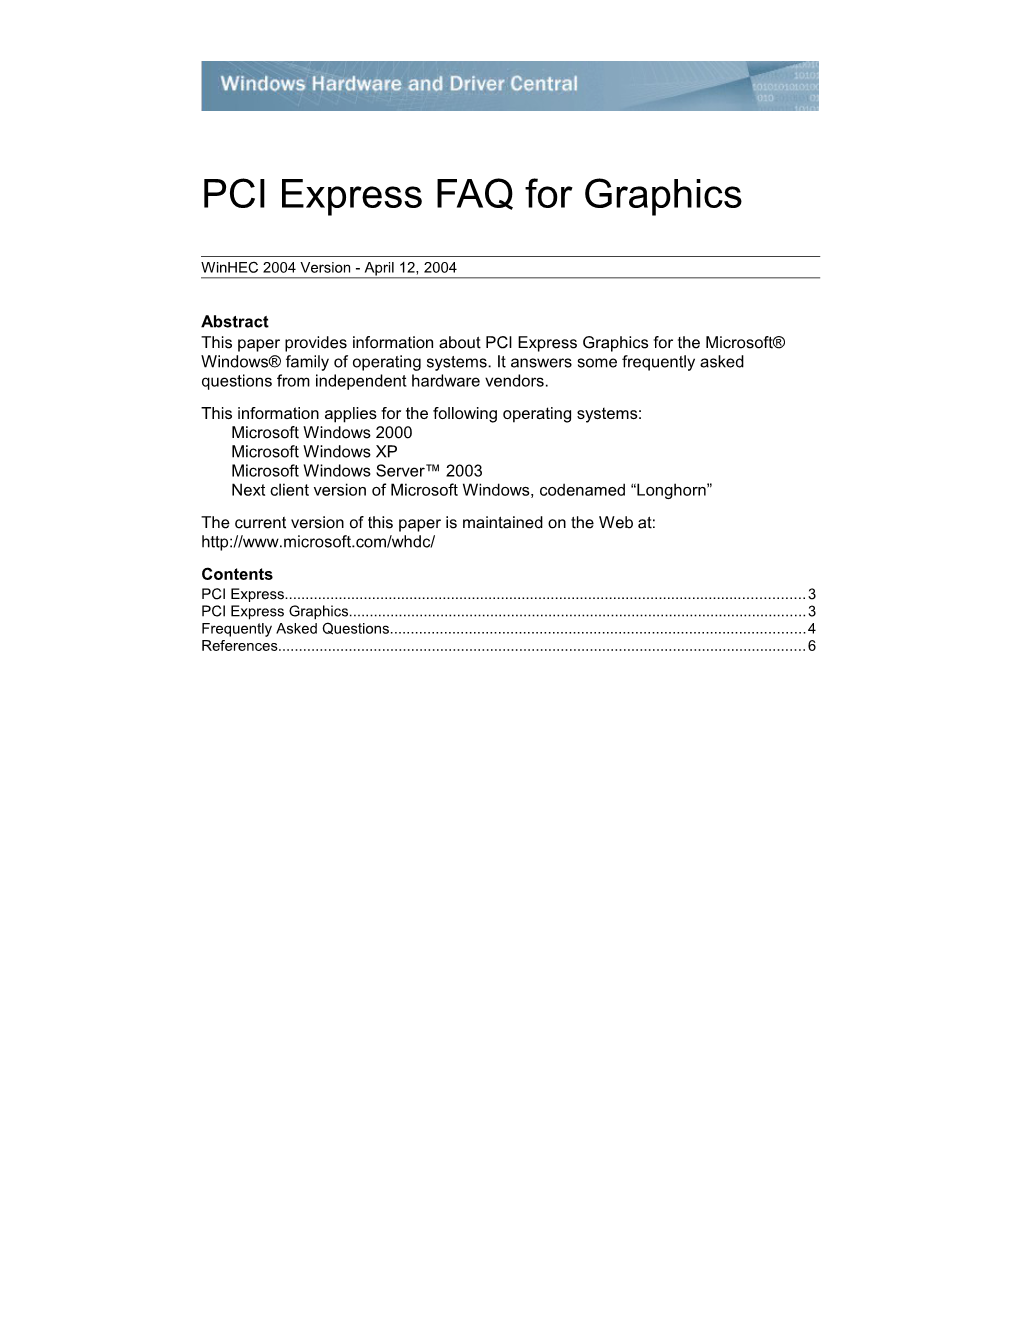 PCI Express FAQ for Graphics